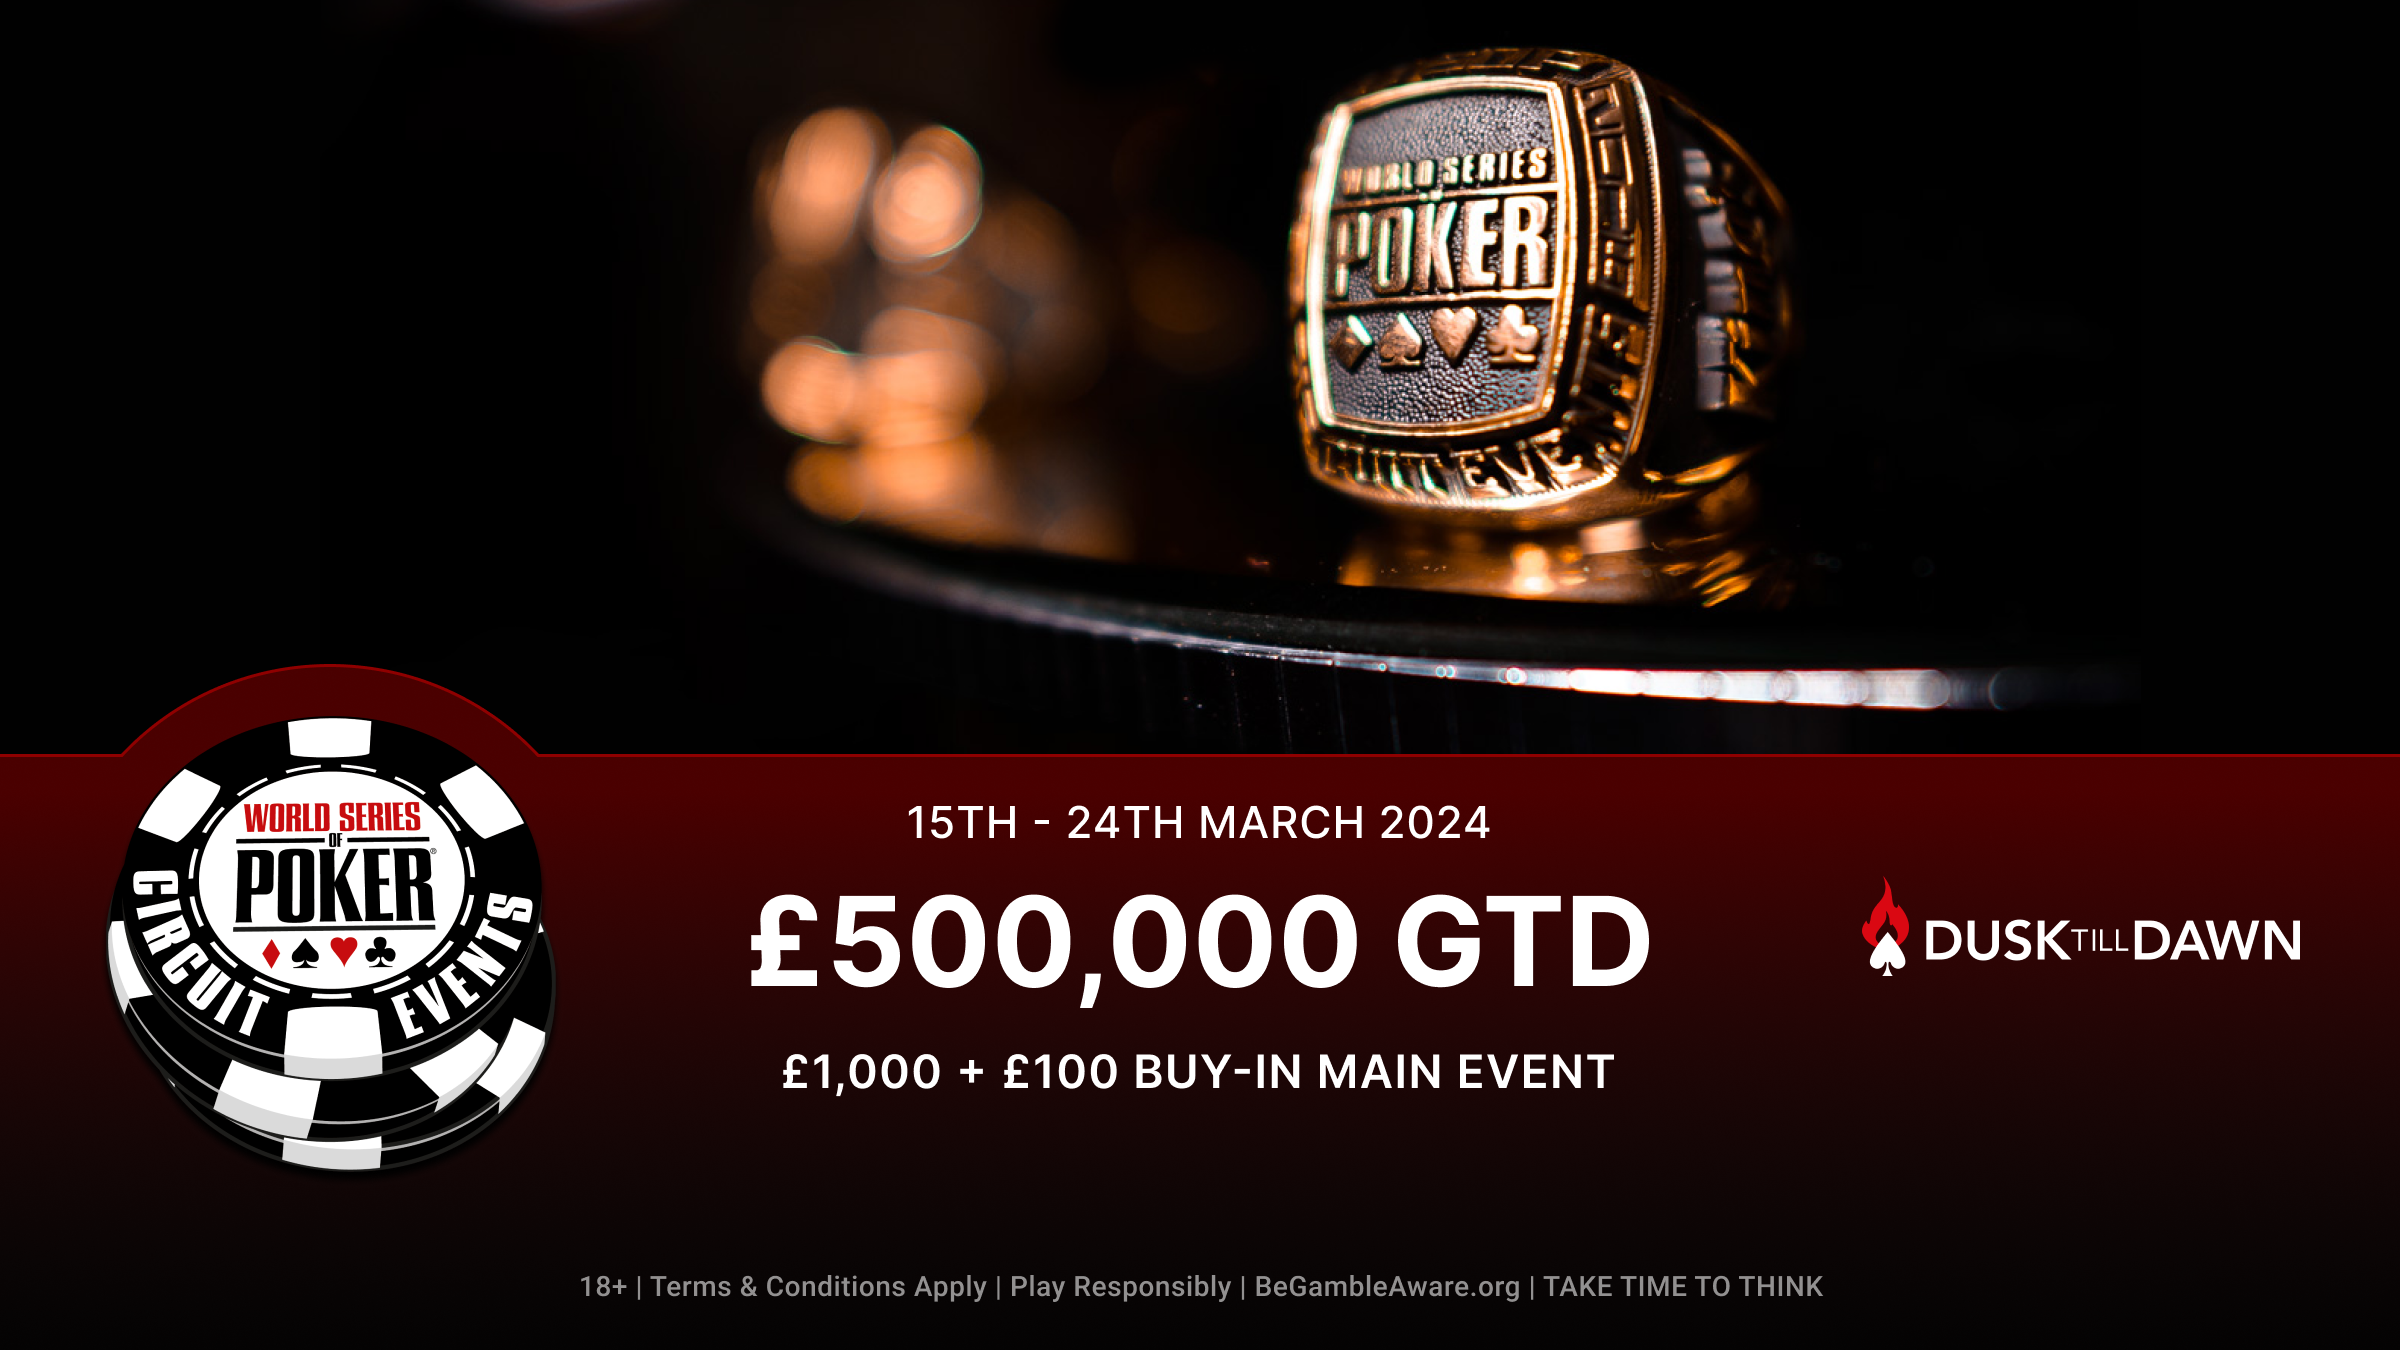 Win a WSOP Circuit Seat Worth £1,100 + £400 Cash! – Poker Raffles